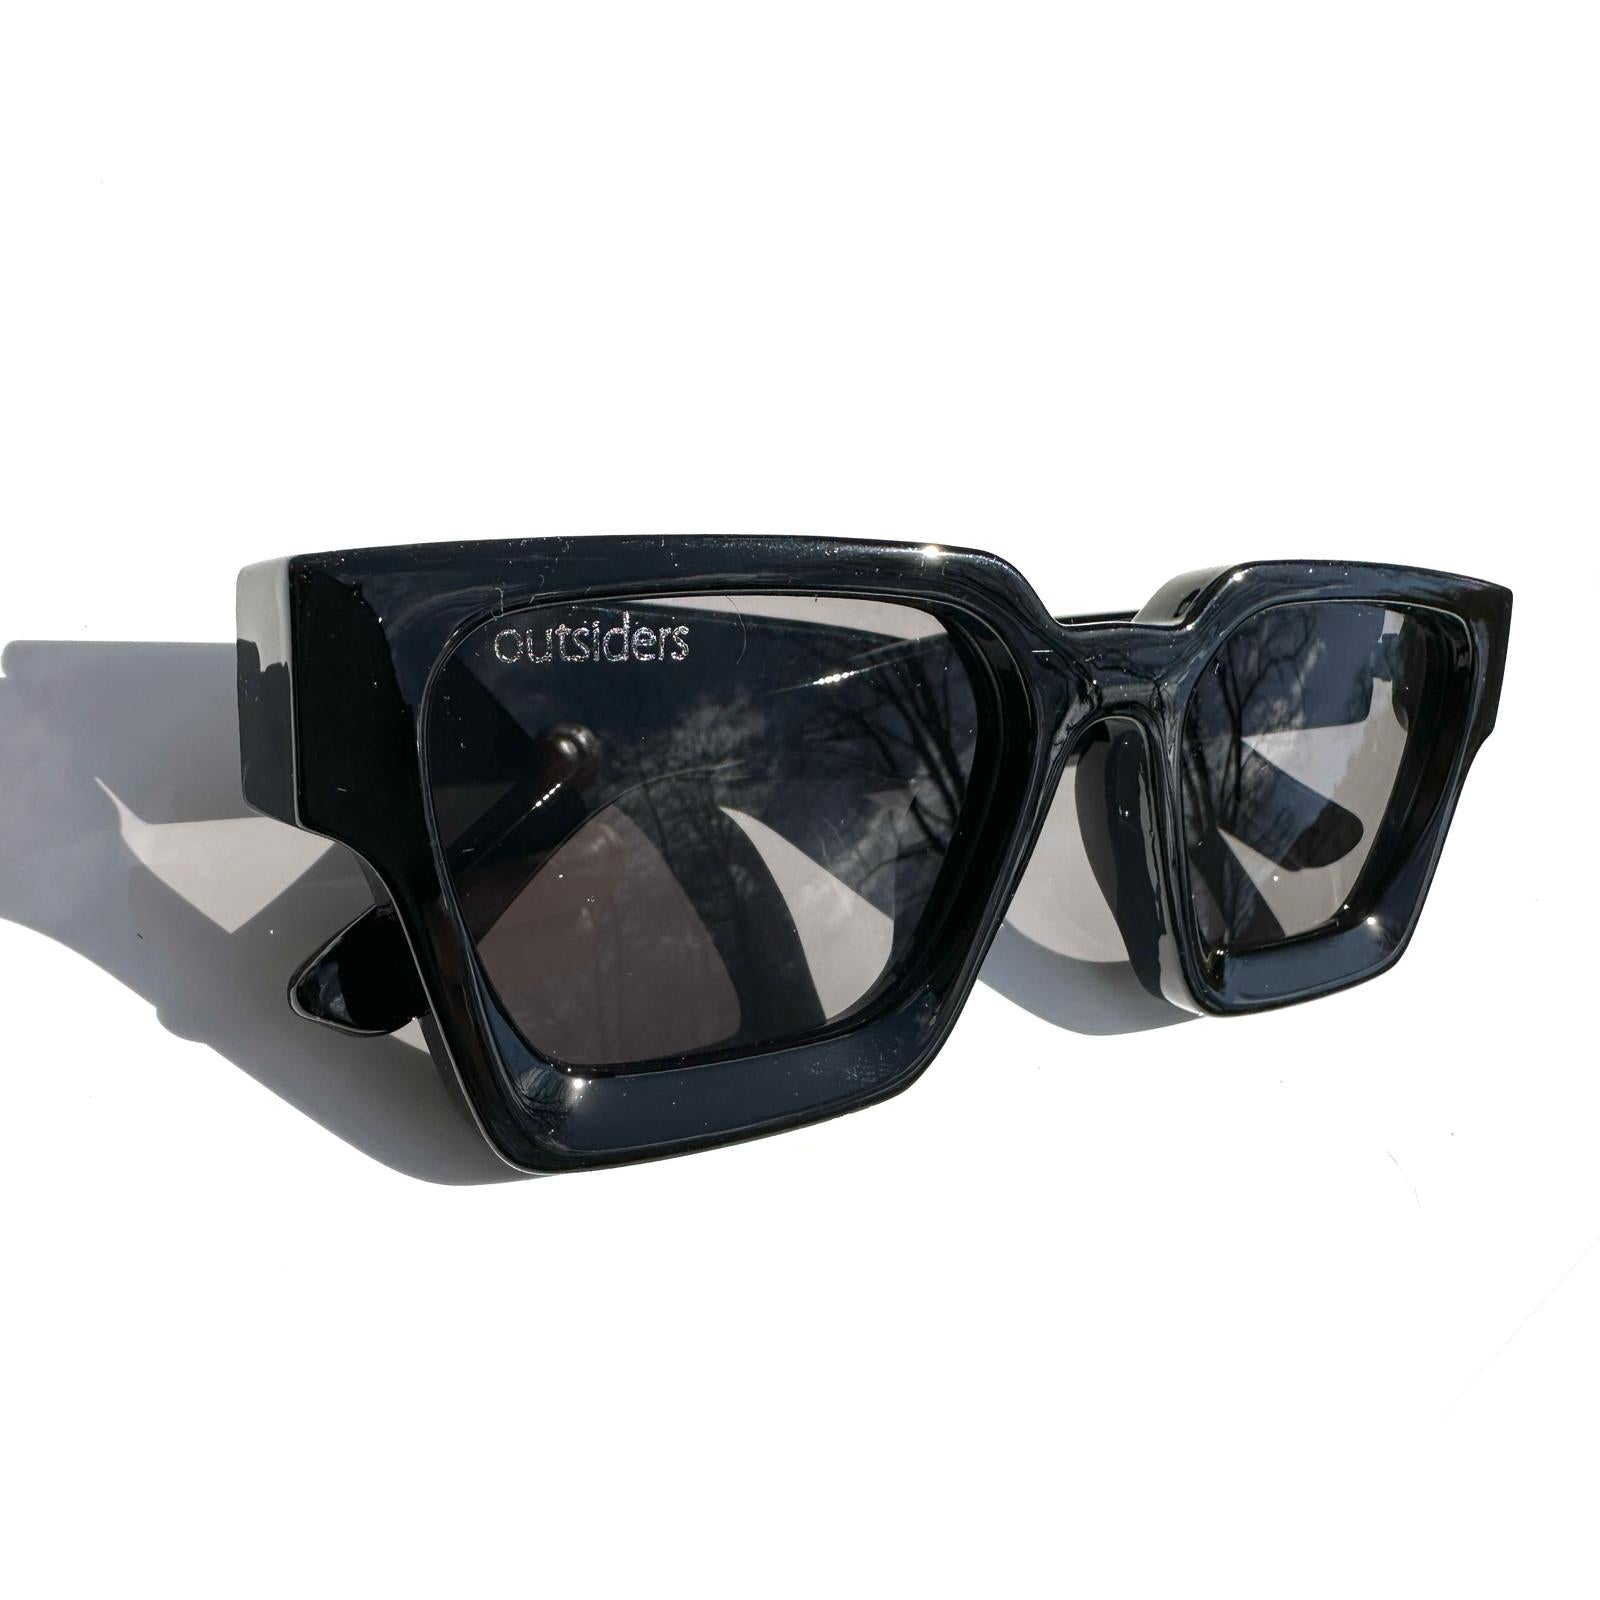 Outsiders - Waved Sunglasses - Black